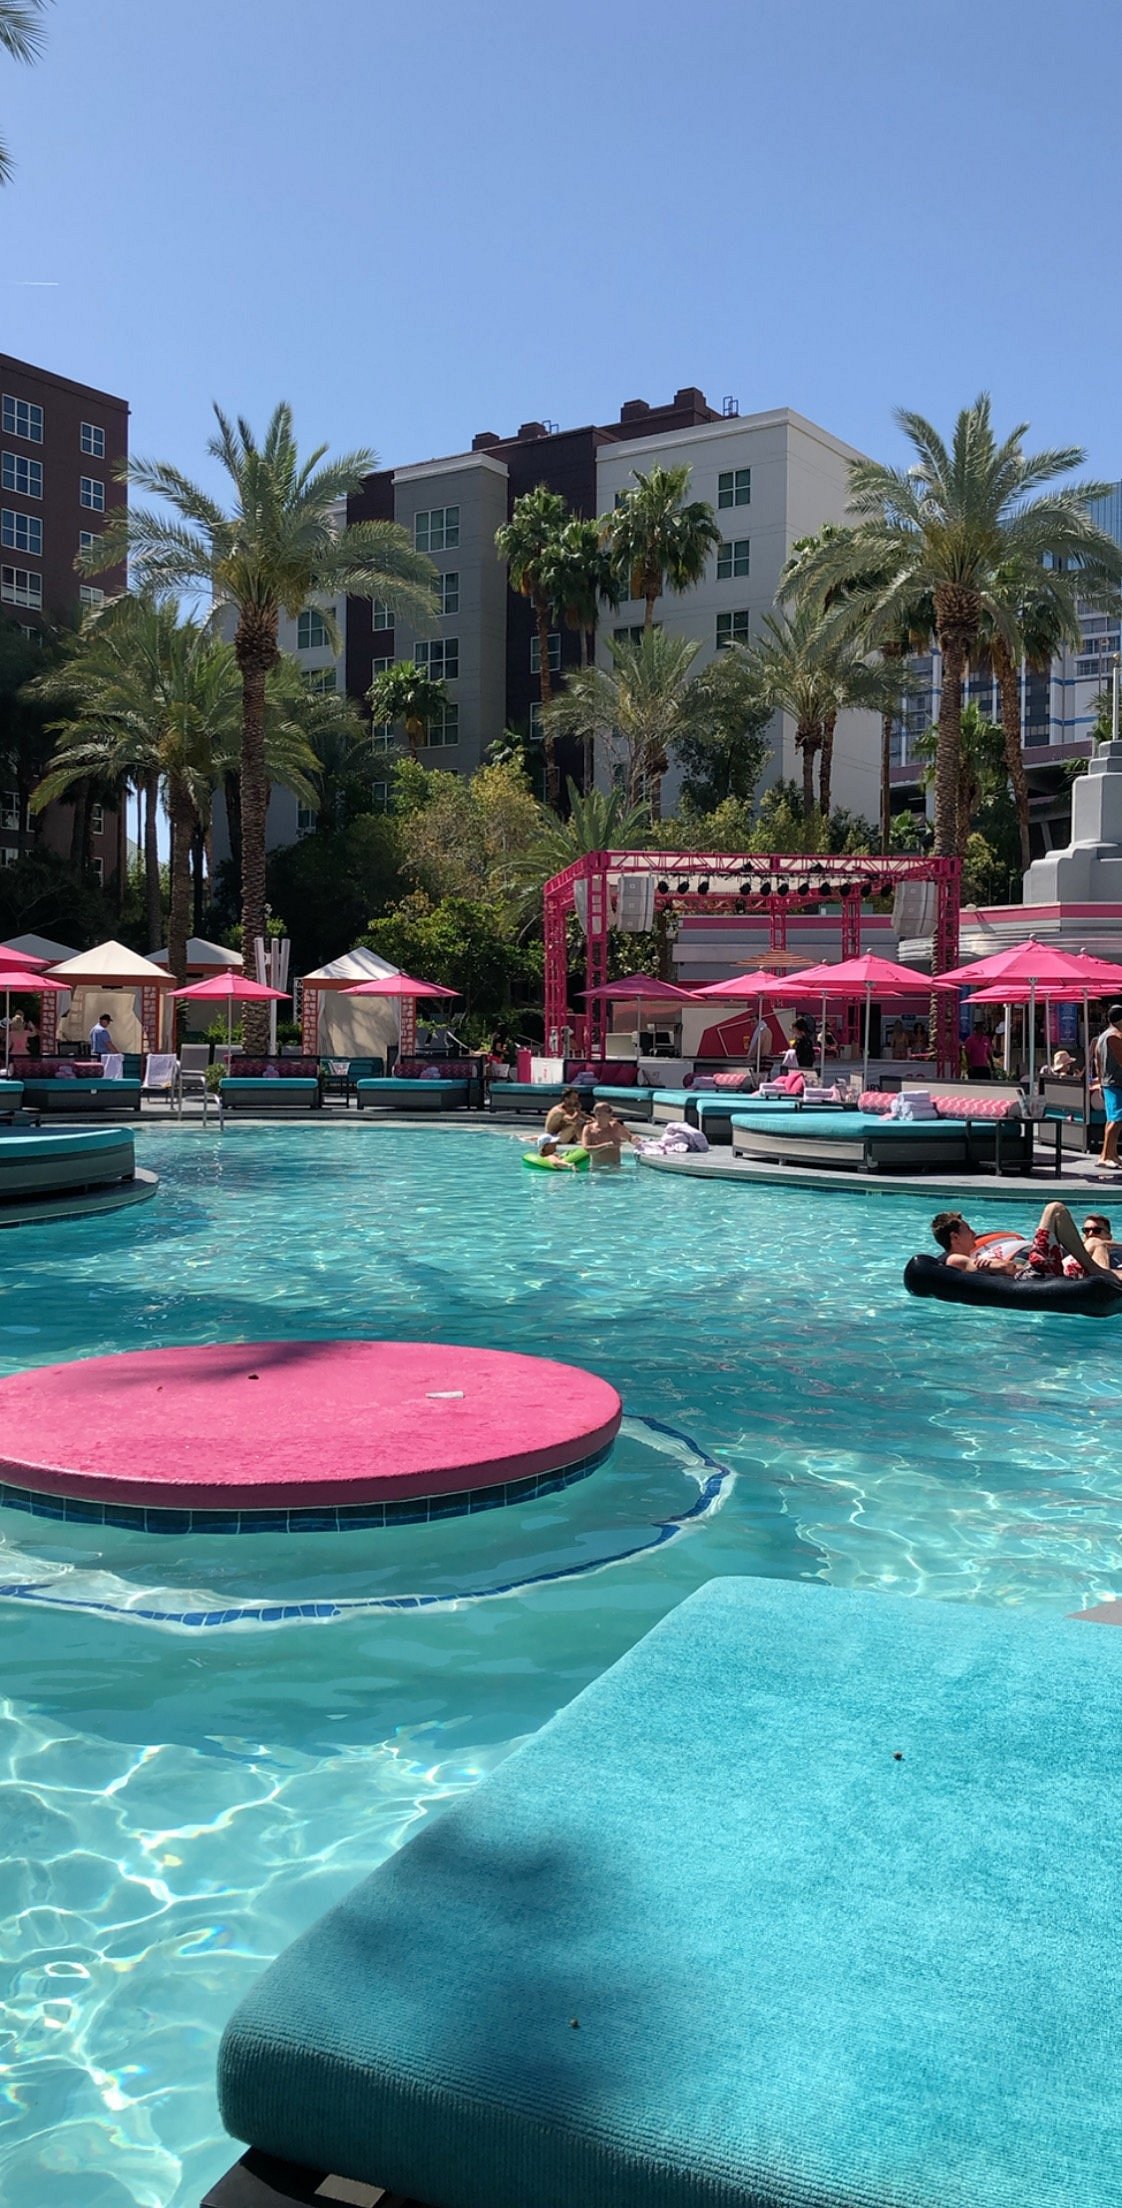 Las Vegas Cabana Prices 2020 at Pool Parties [FULL GUIDE]